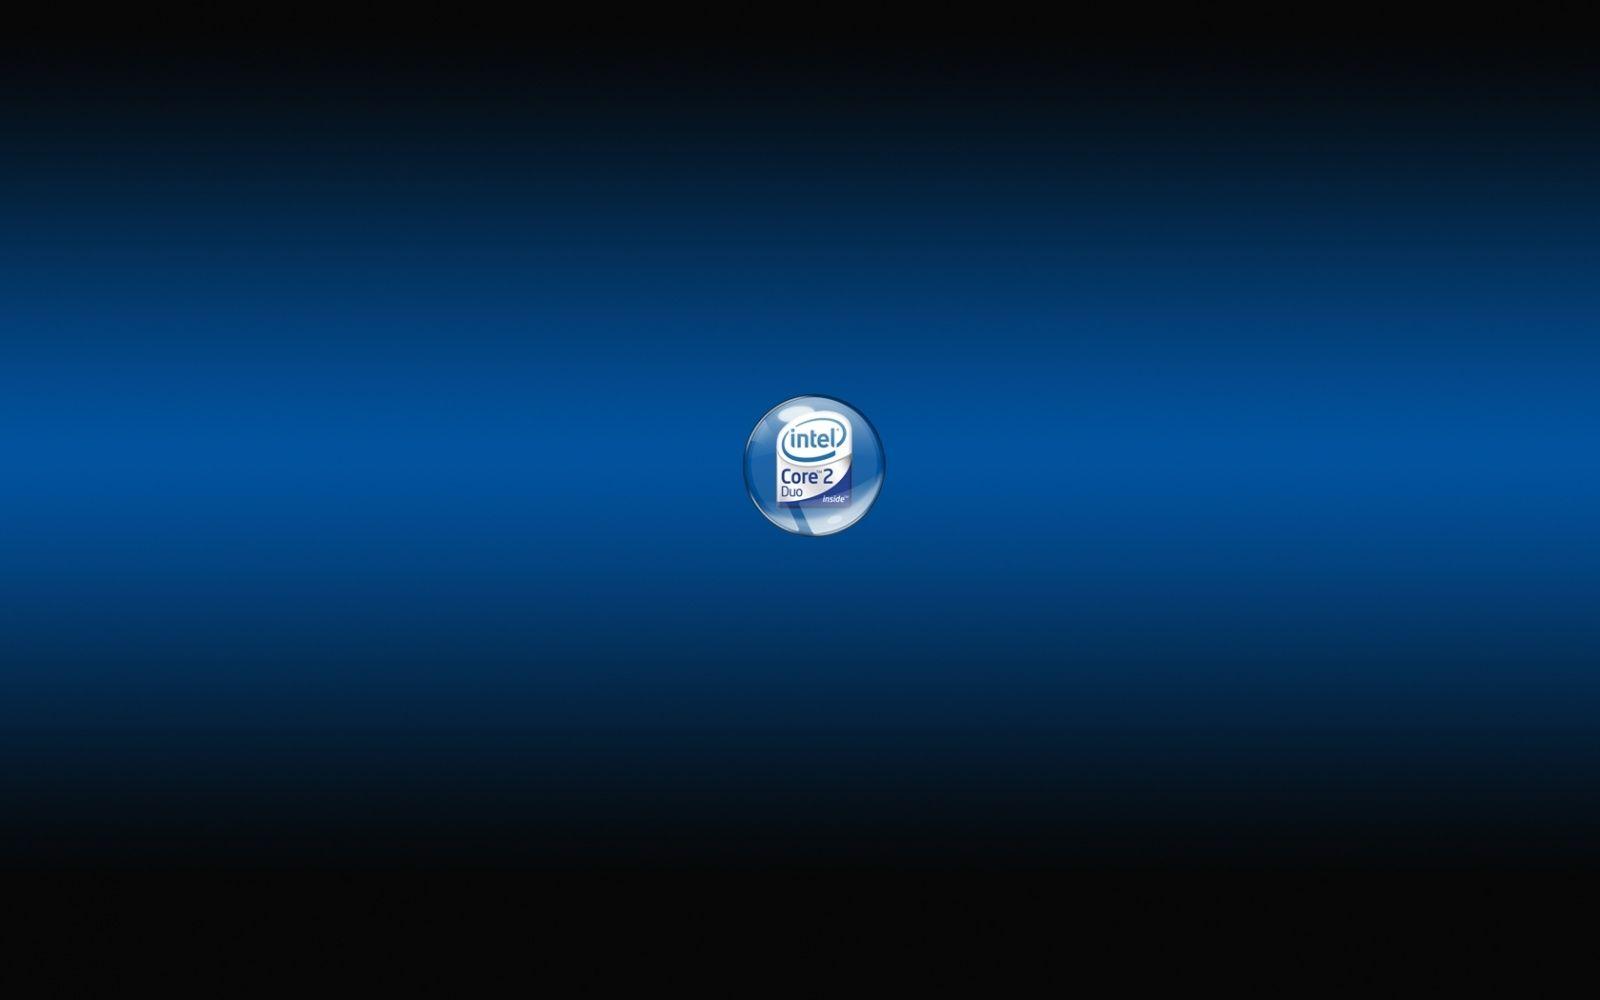 Inside Intel Core Logo - Intel Core 2 Logo wallpaper. Intel Core 2 Logo